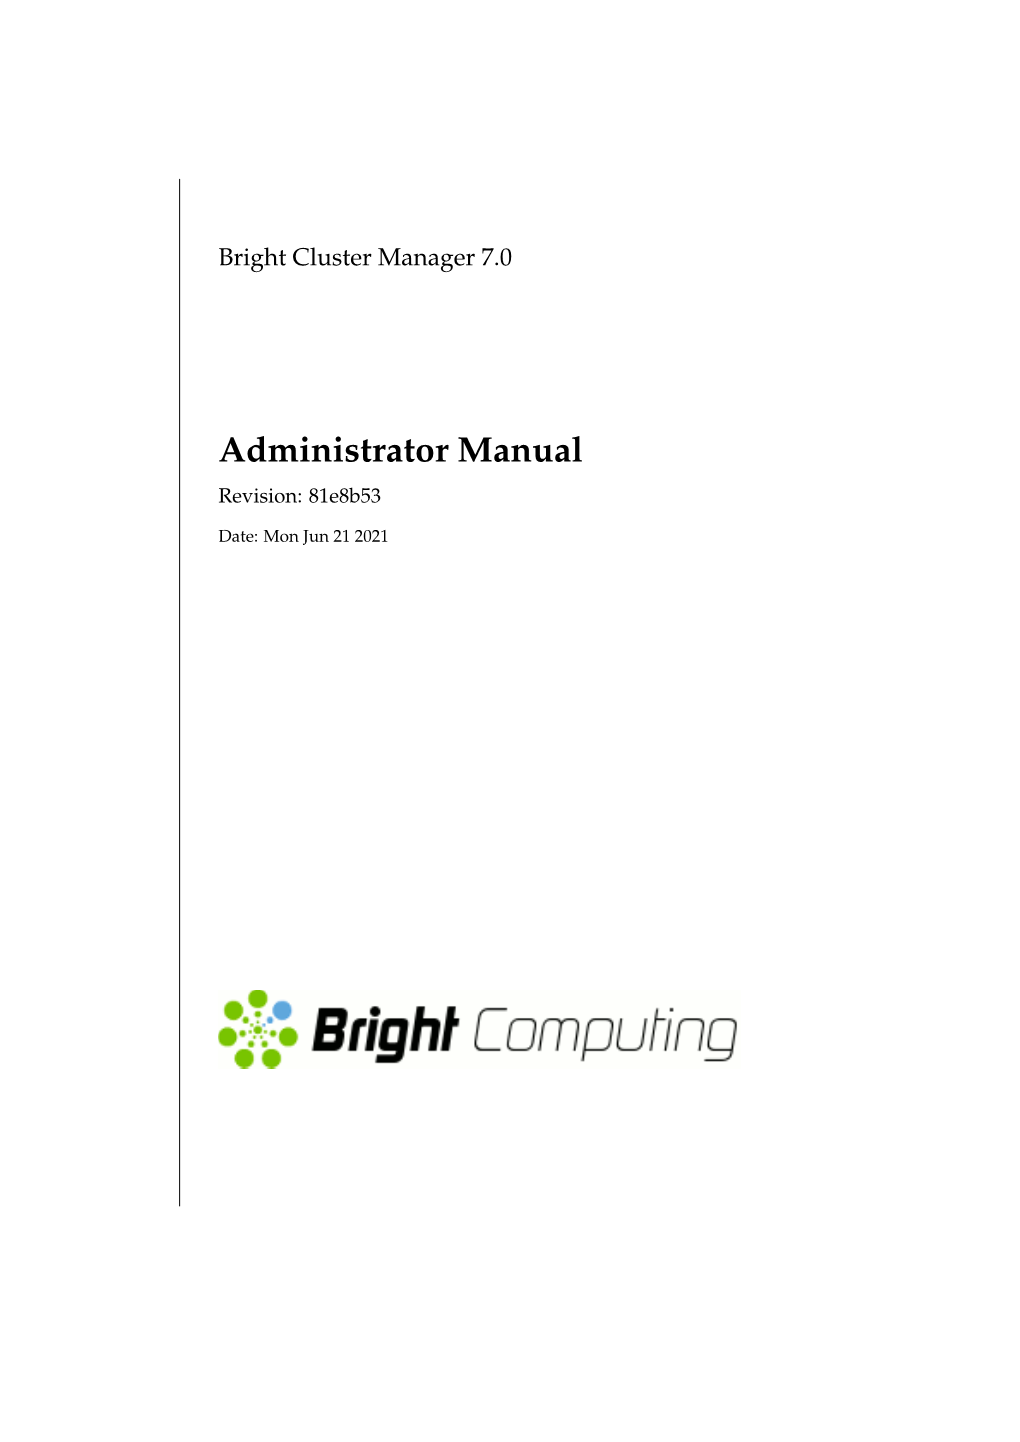 Administrator Manual Revision: 81E8b53